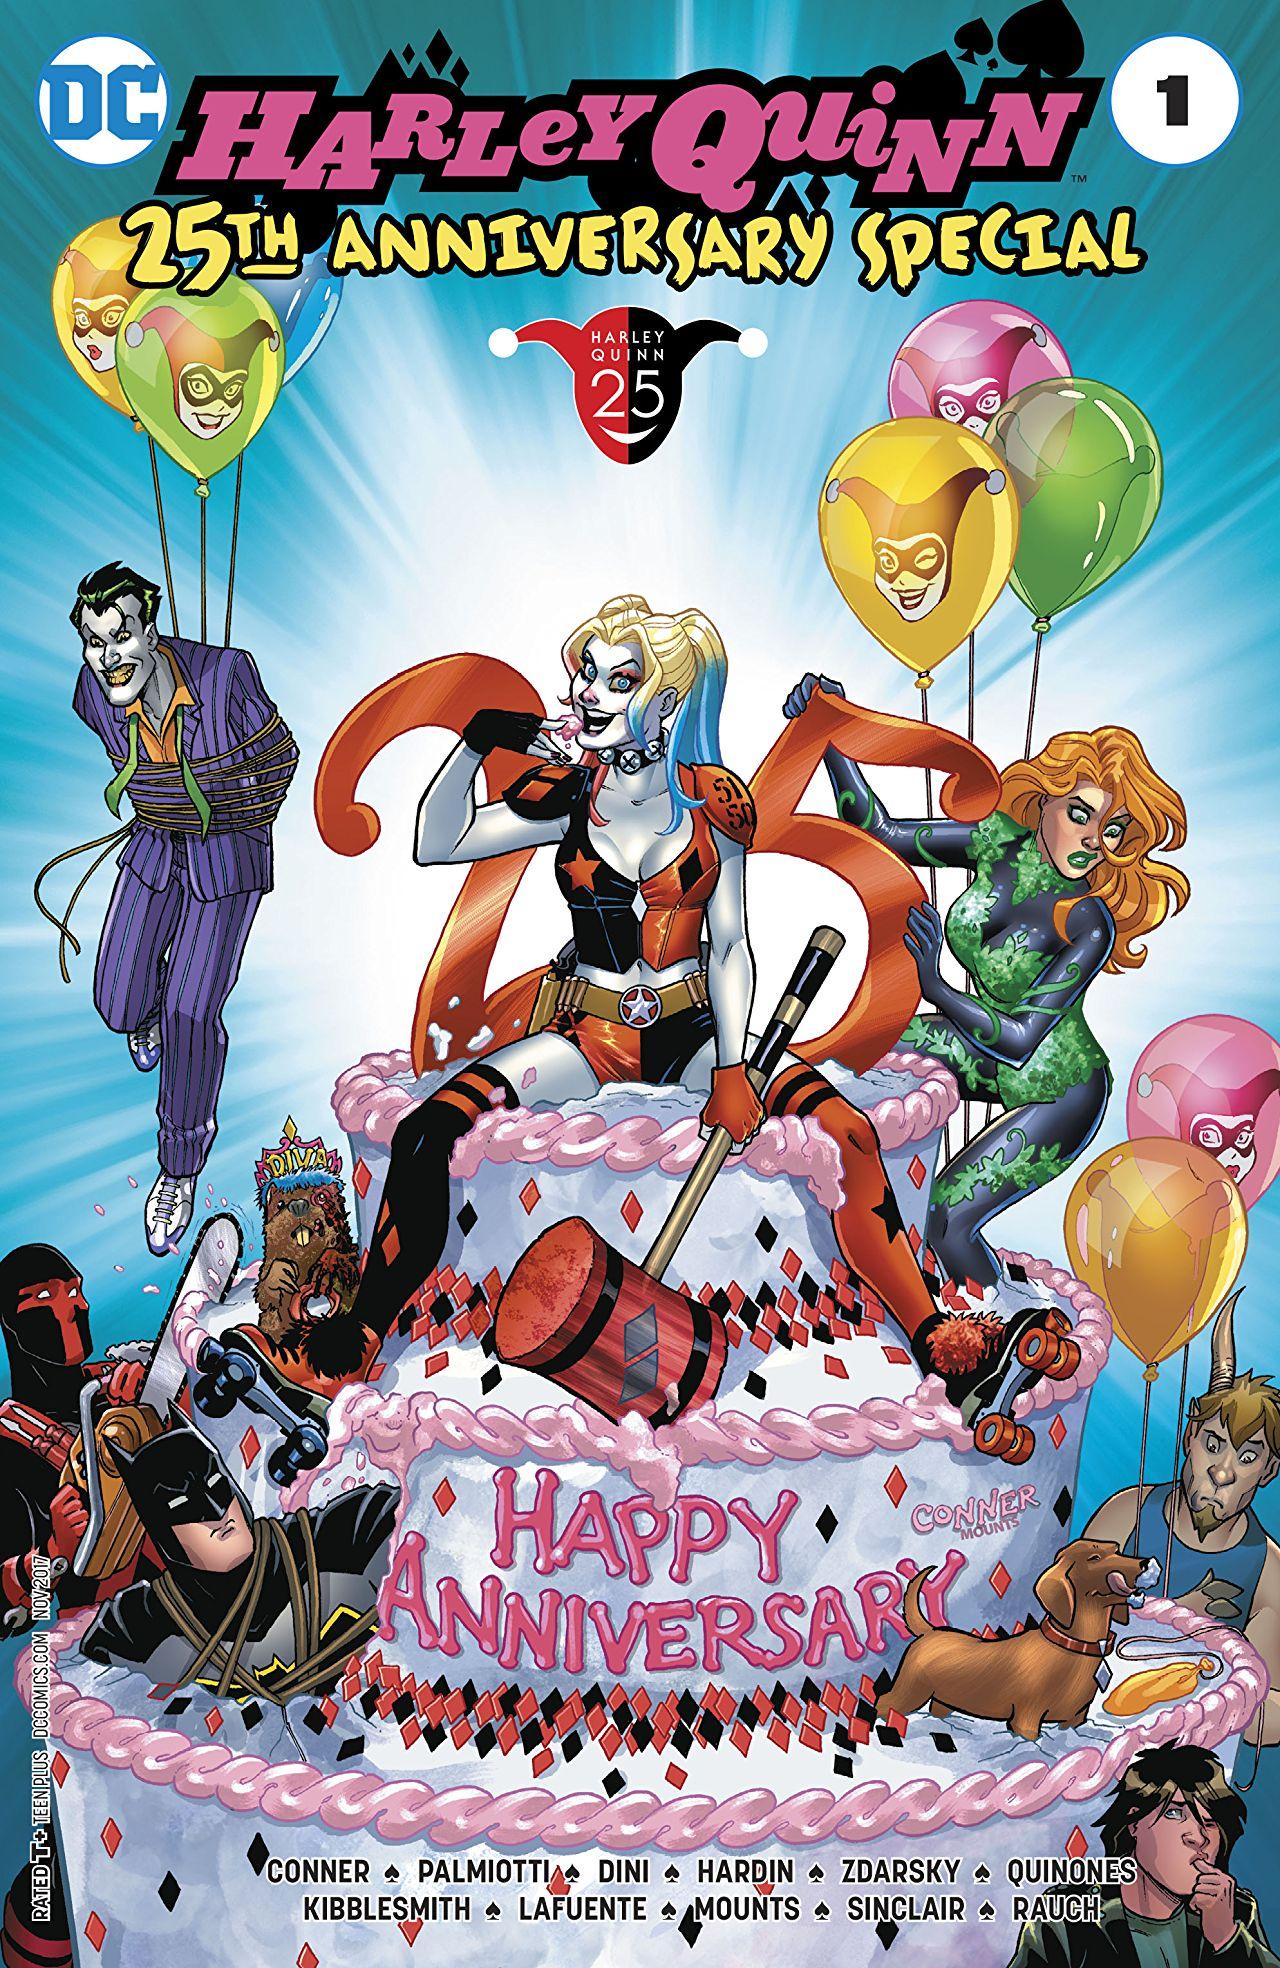 Harley Quinn 25th Anniversary Special Vol. 1 #1